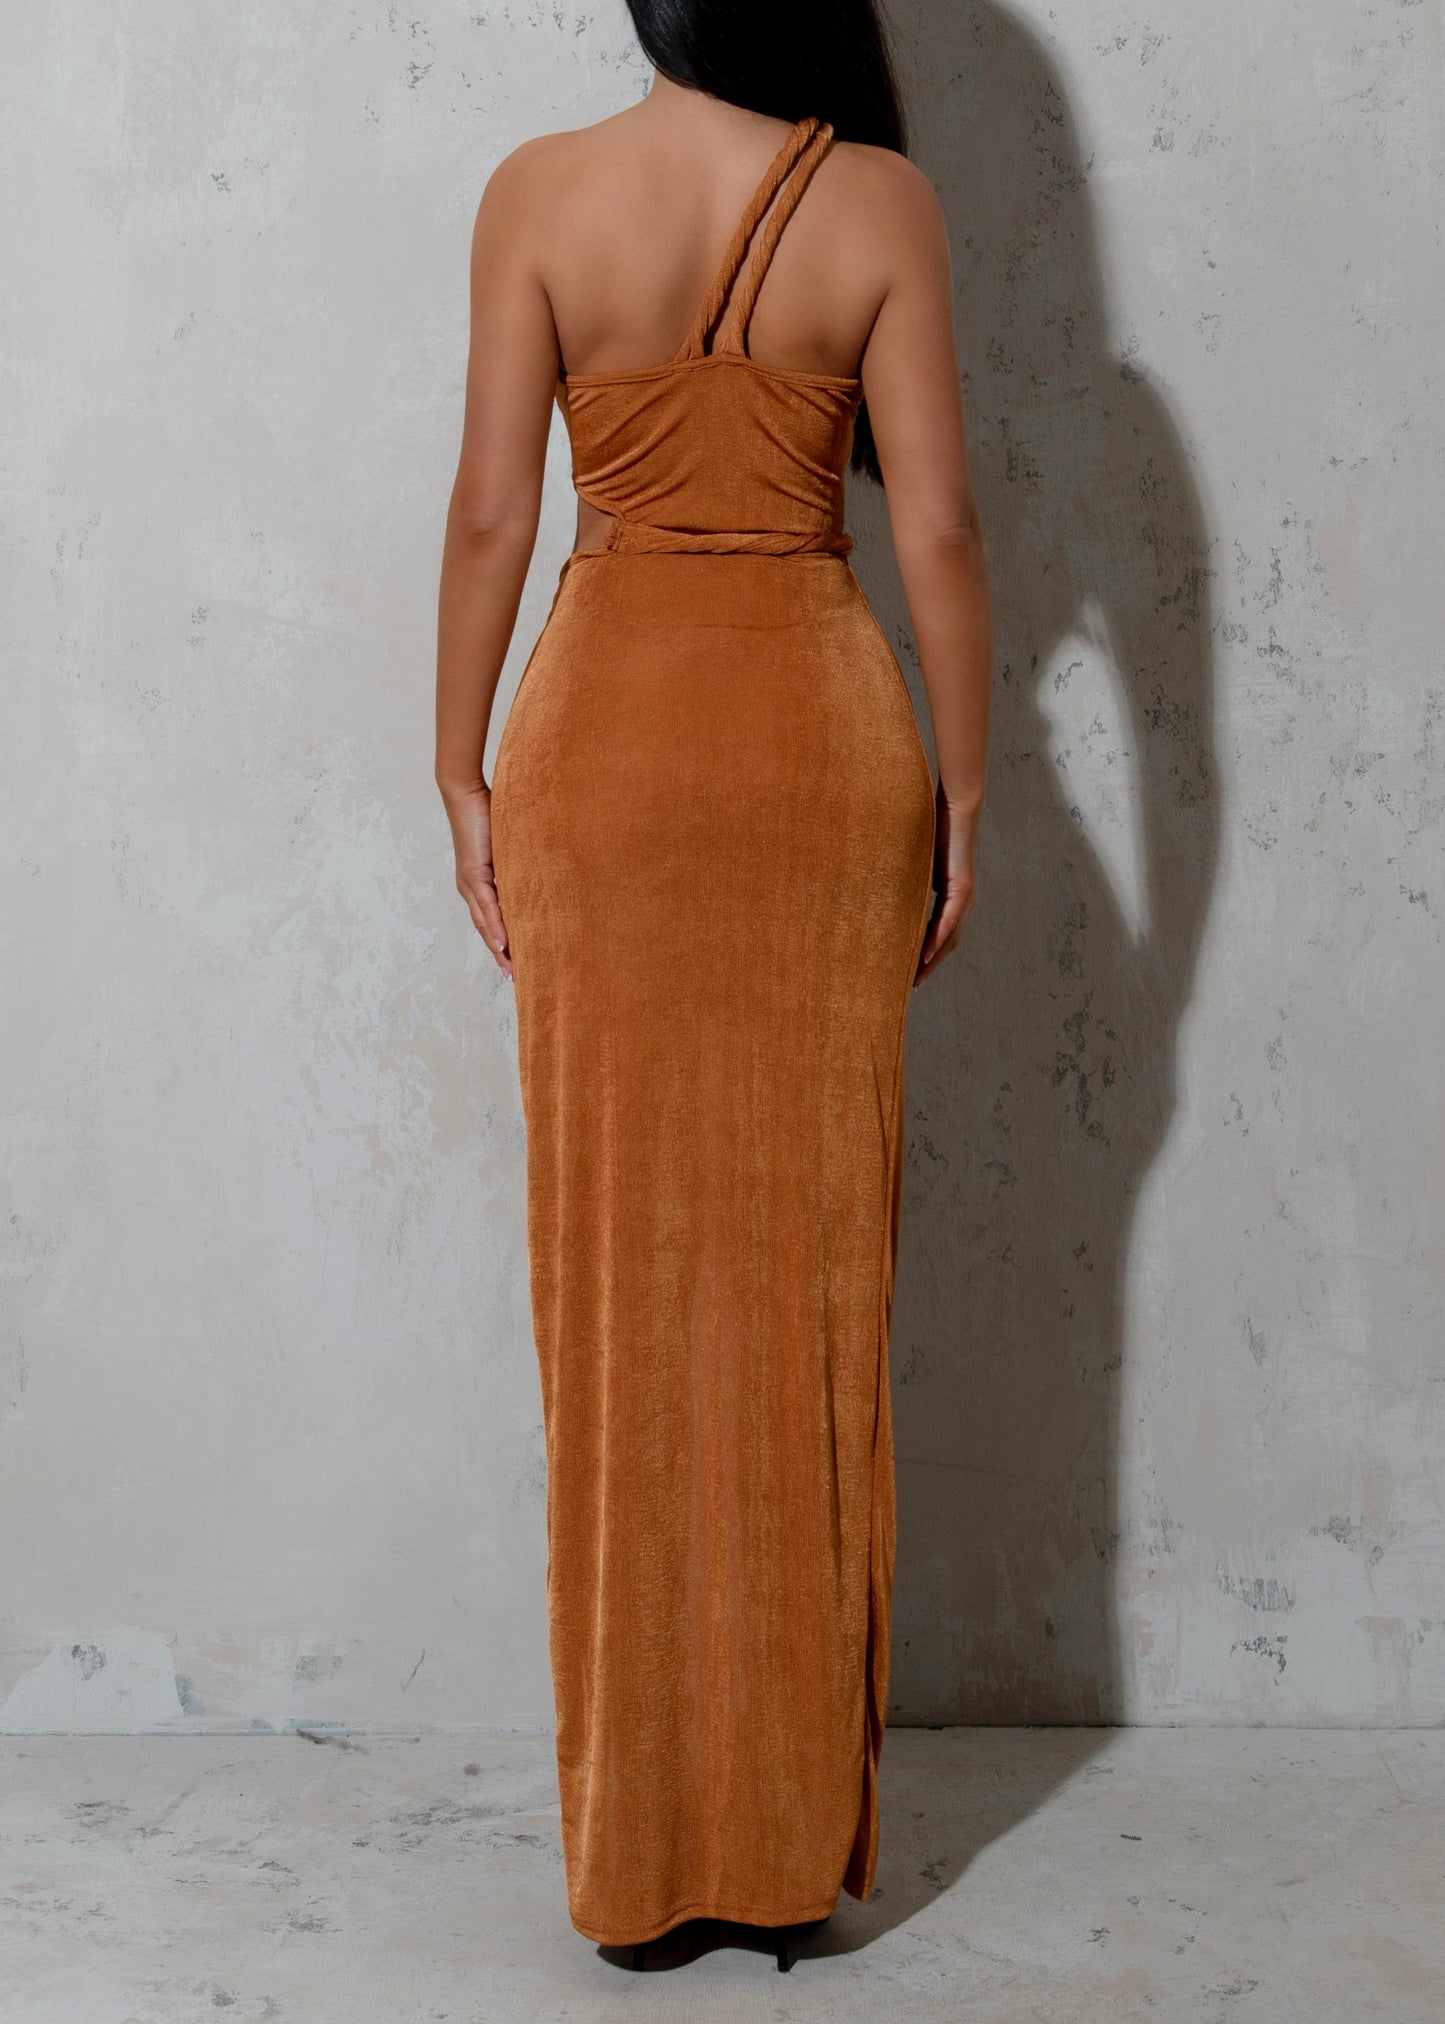 NIA - Burnt Orange Maxi Dress Shimmer